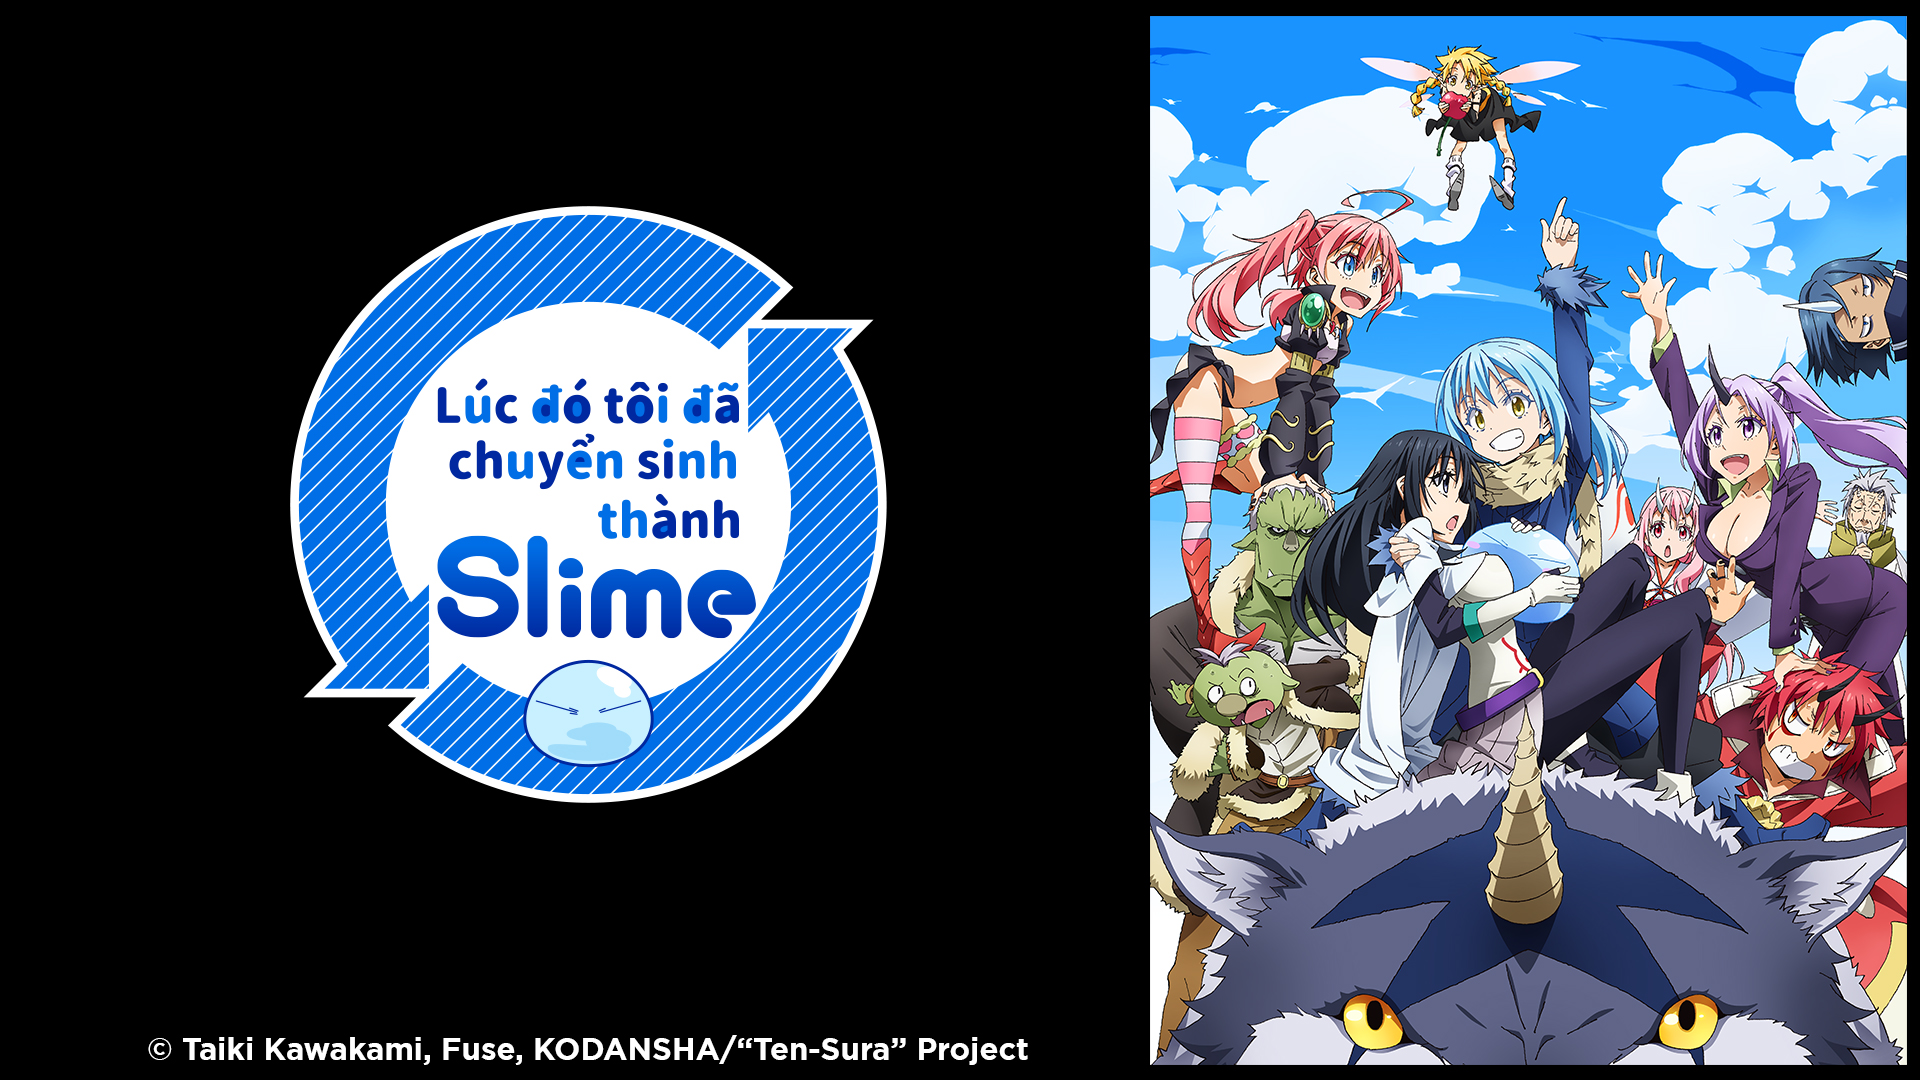 450 Hình nền anime rimuru cho fan của Tensei Shitara Slime Datta Ken